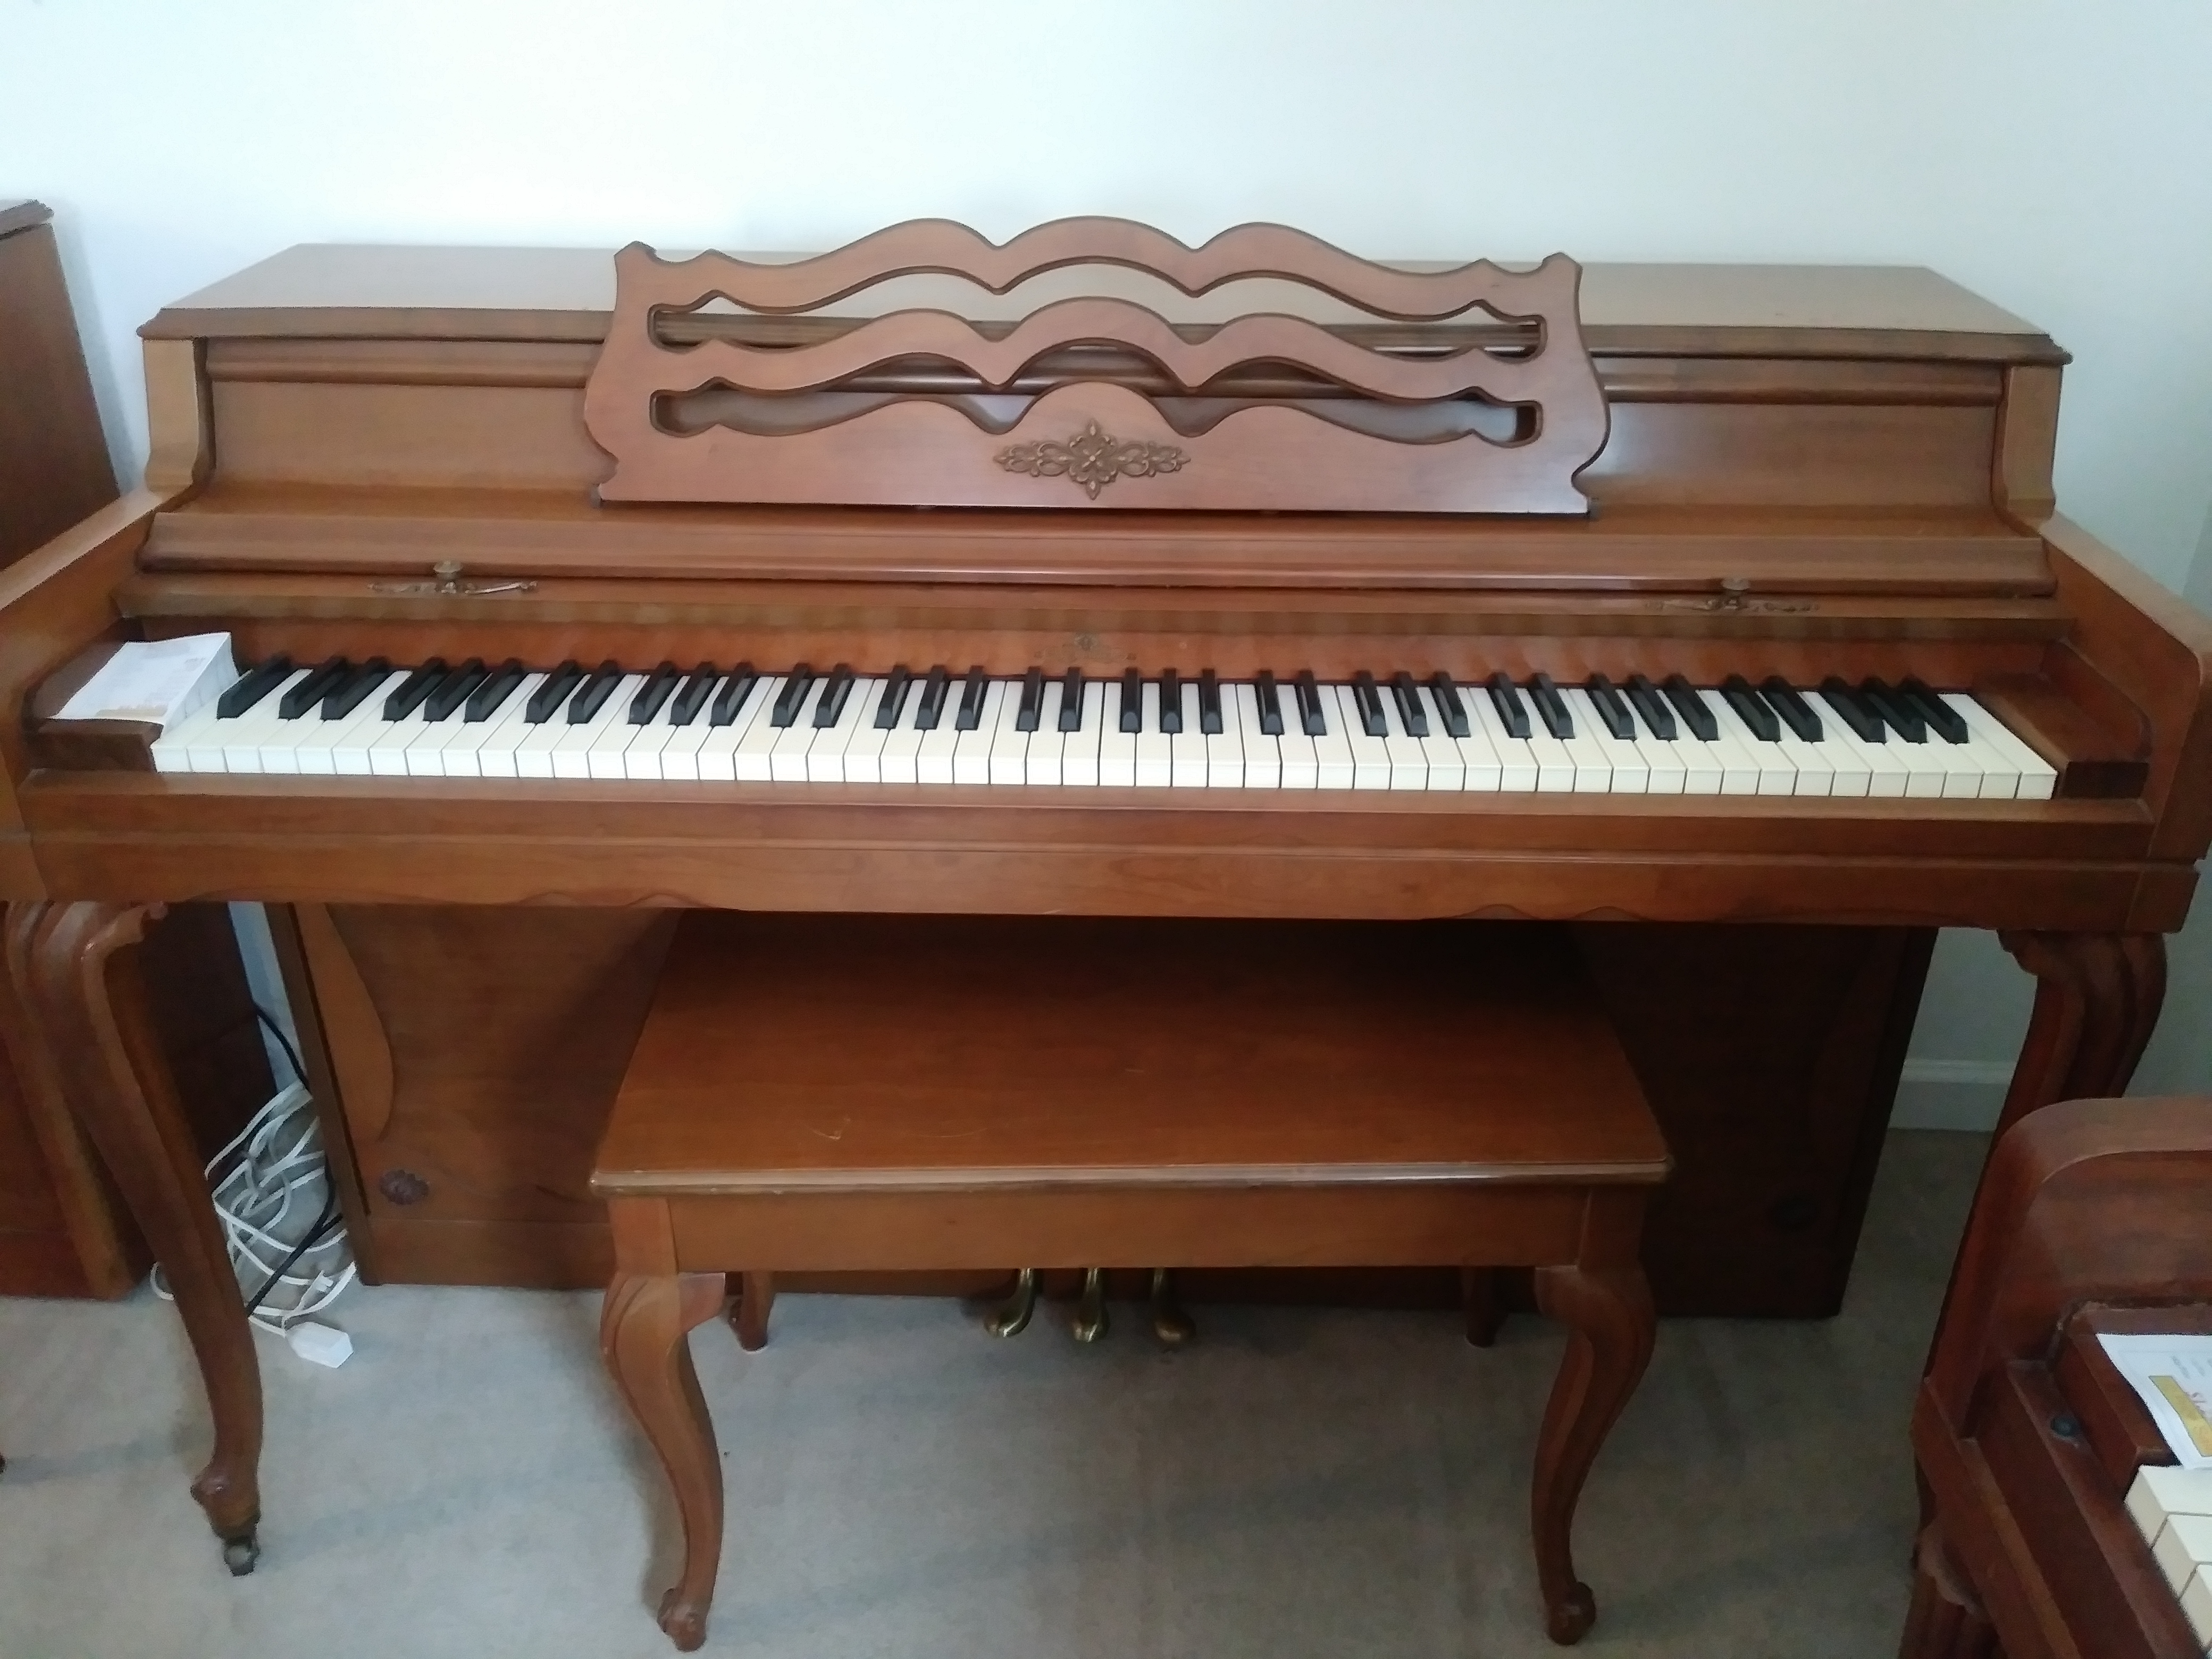 1965 black wurlitzer spinet piano